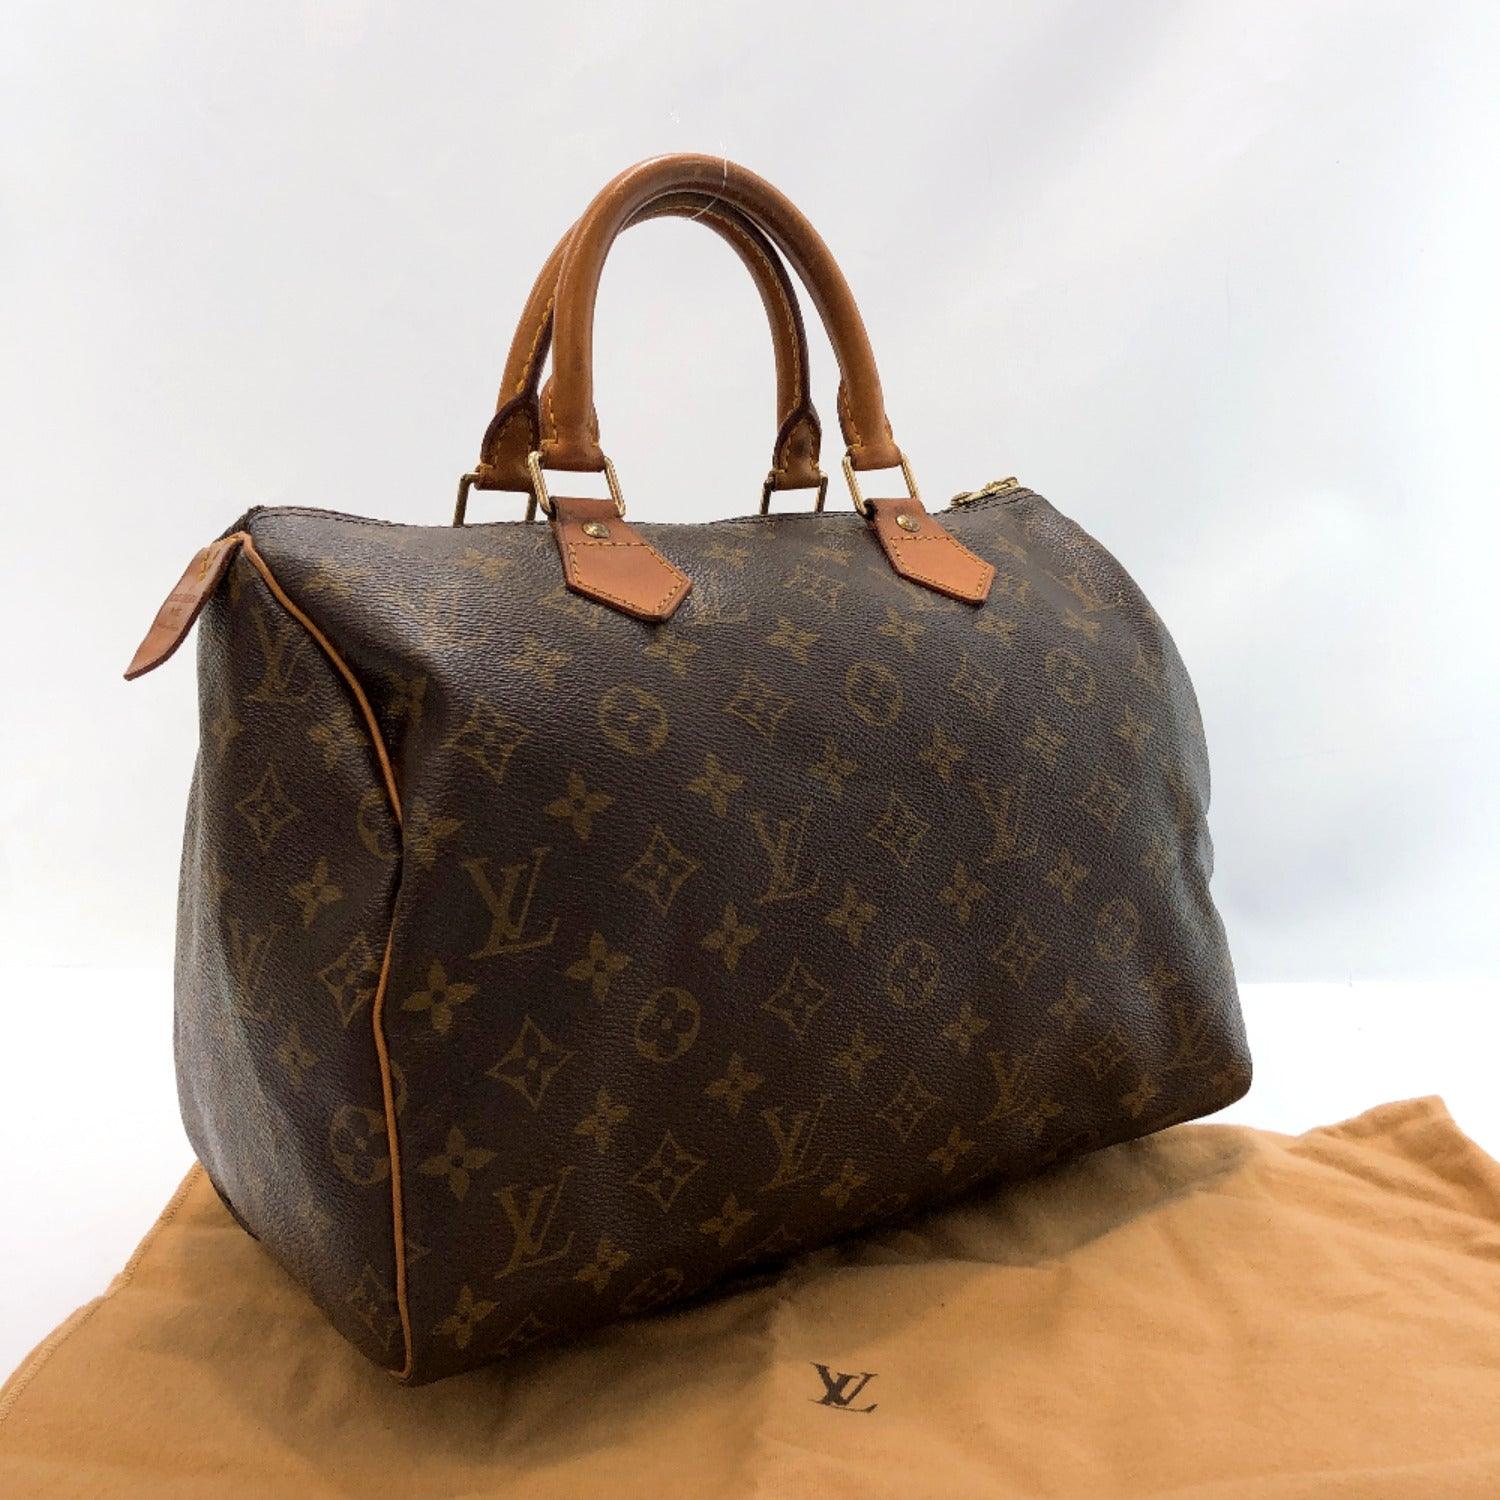 Buy Louis Vuitton monogram LOUIS VUITTON Speedy 30 Monogram M41526 Handbag  Brown / 250571 [Used] from Japan - Buy authentic Plus exclusive items from  Japan